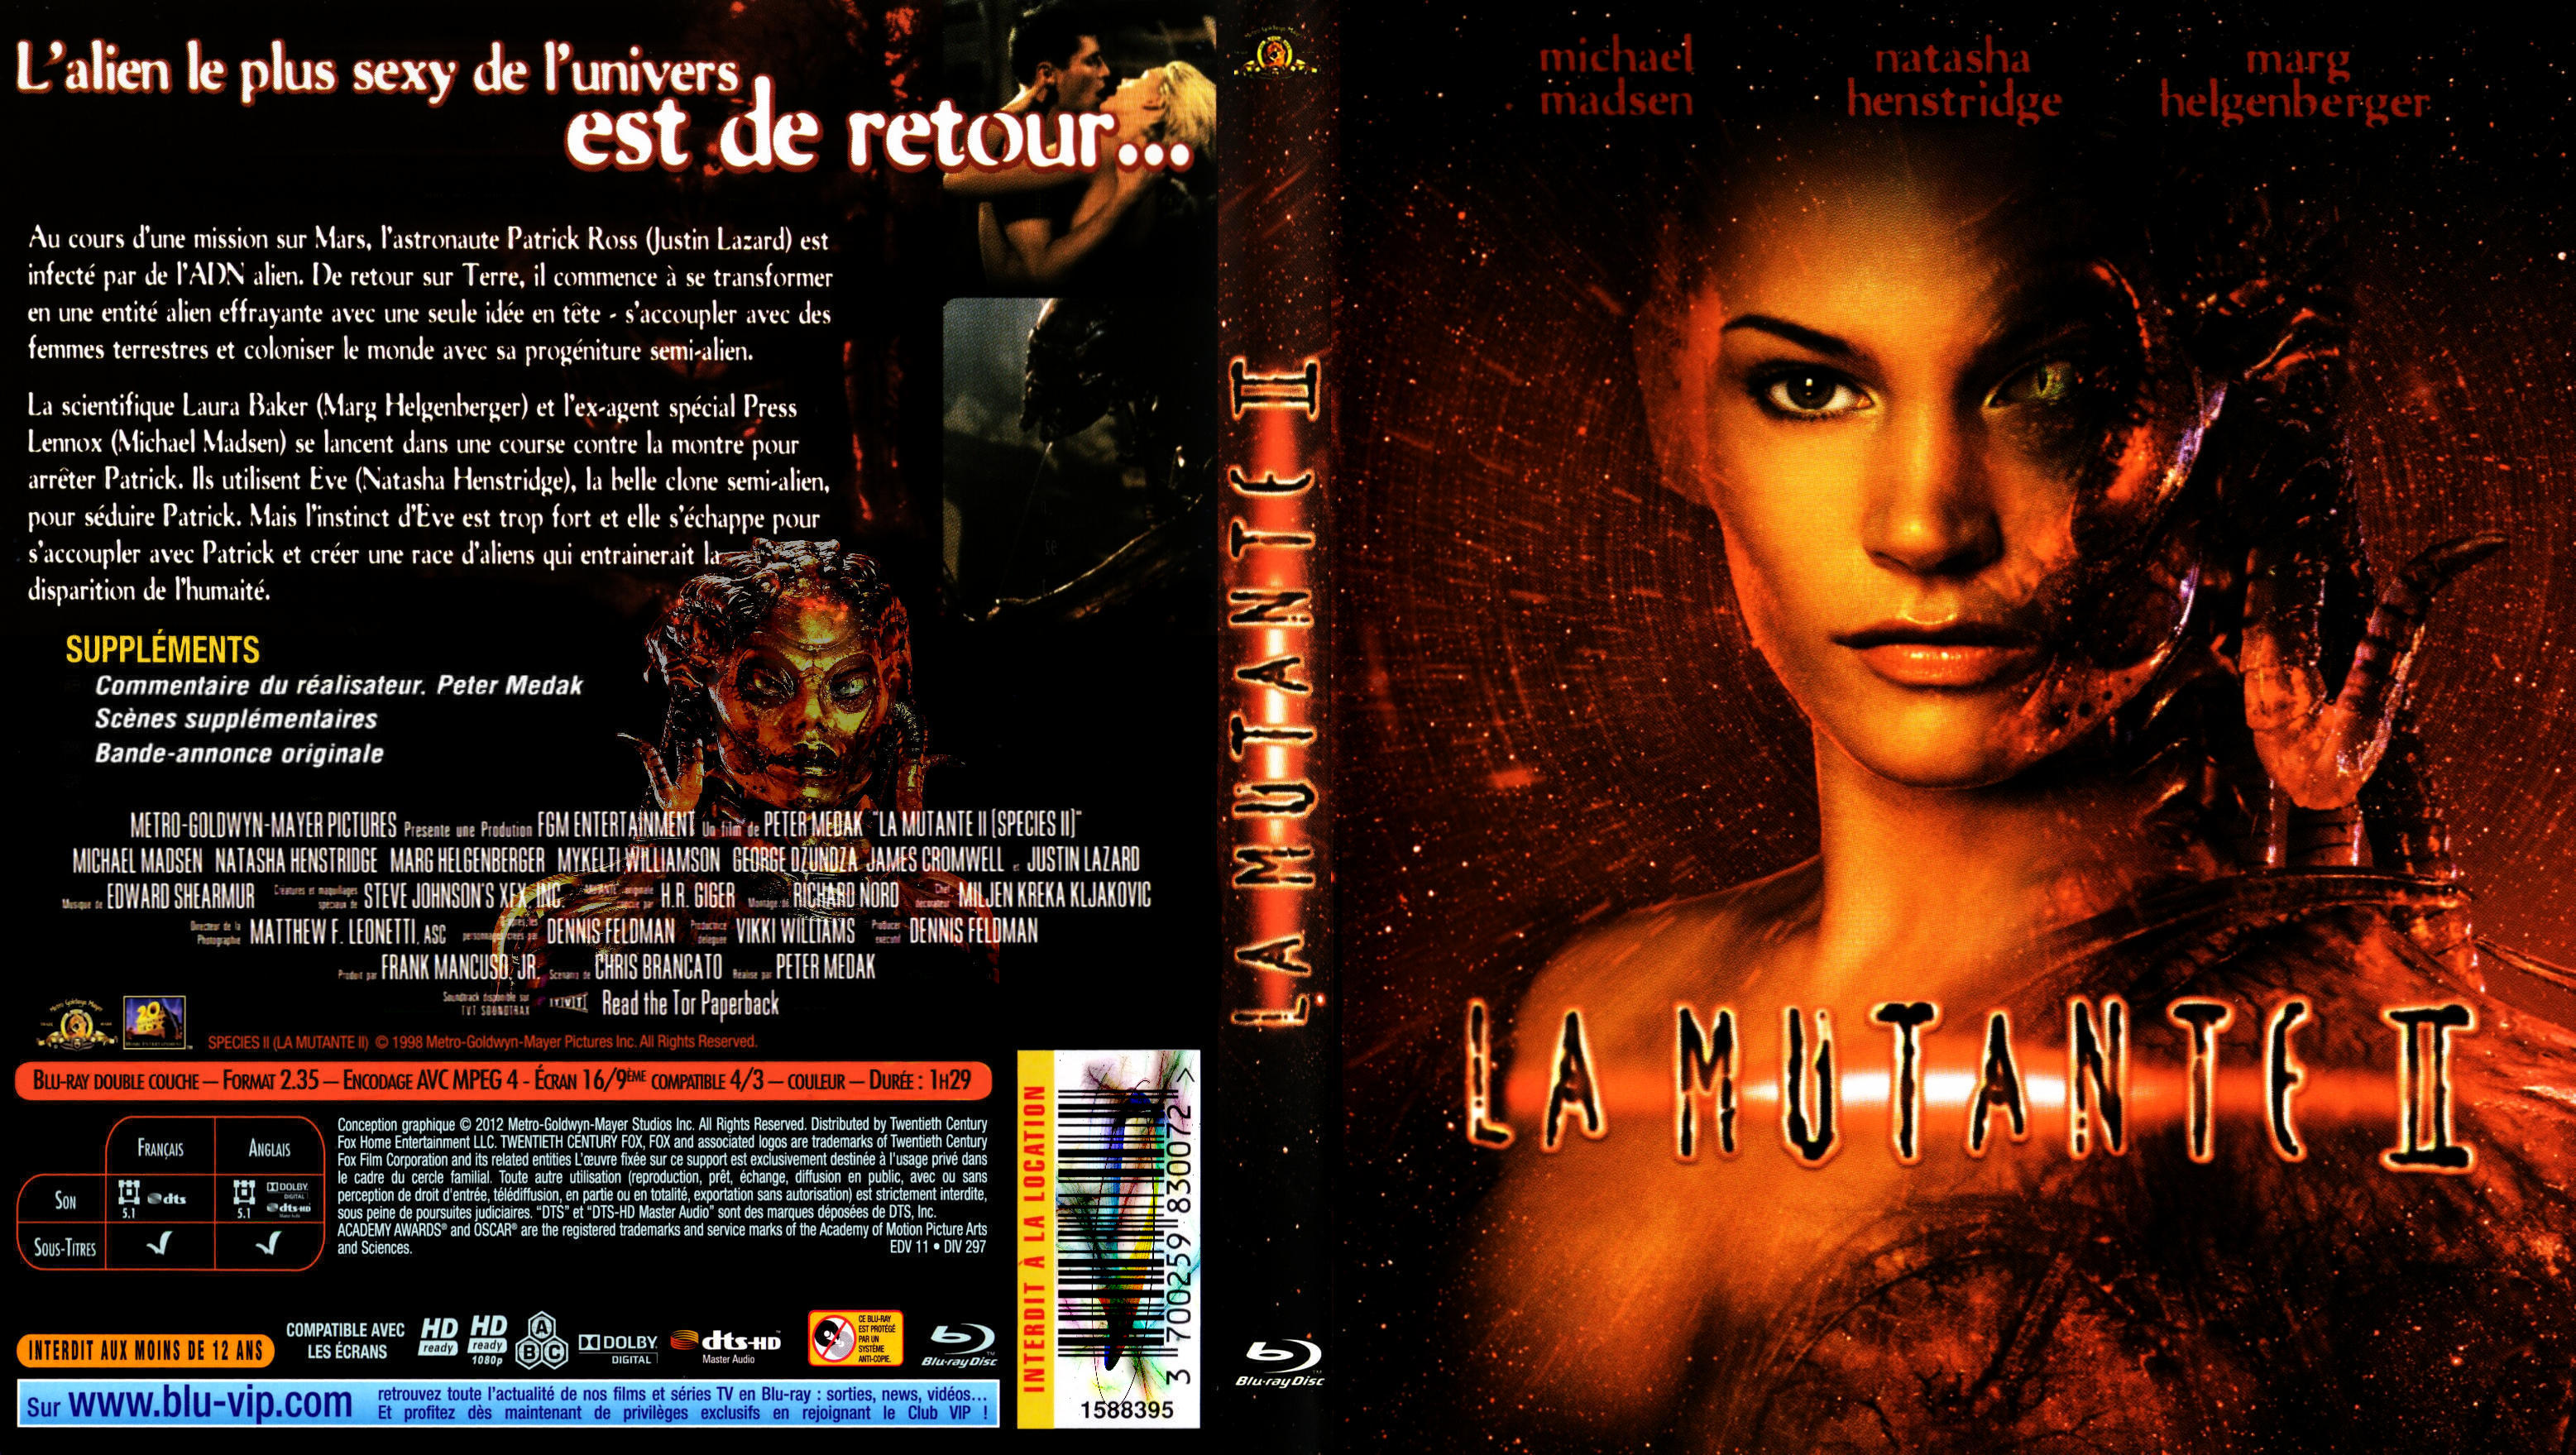 Jaquette DVD La mutante 2 custom (BLU-RAY)